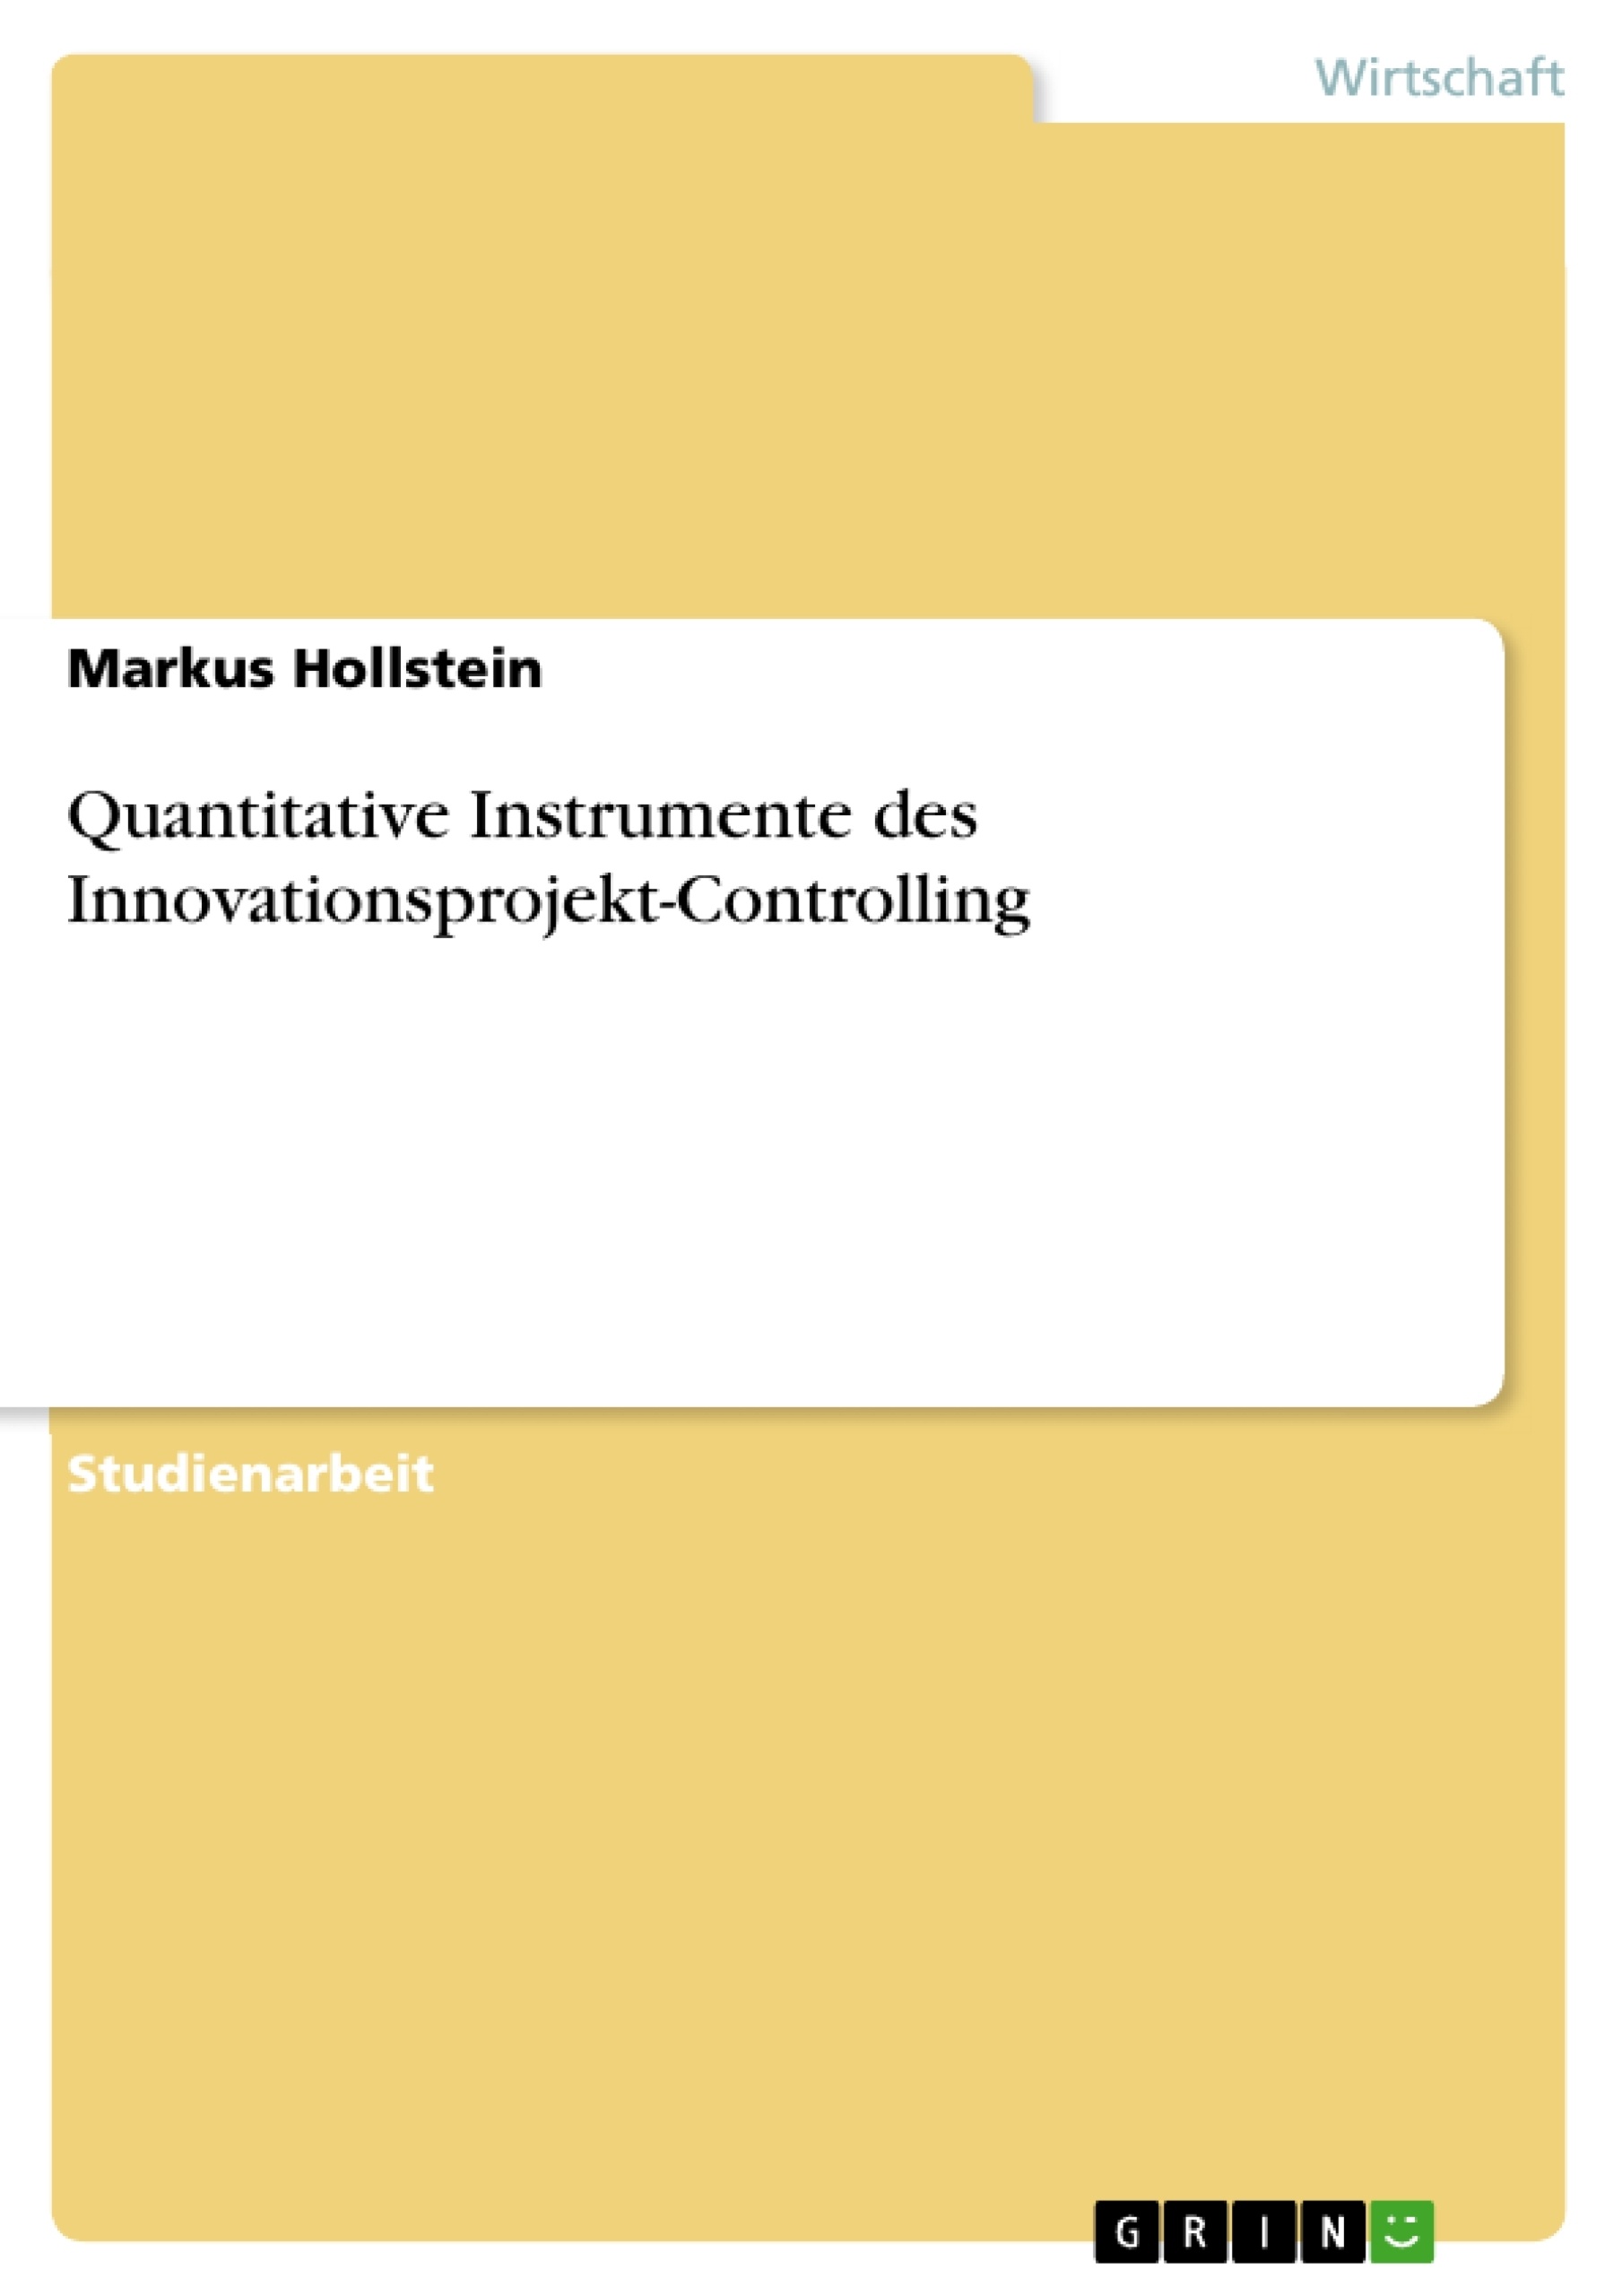 Title: Quantitative Instrumente des Innovationsprojekt-Controlling